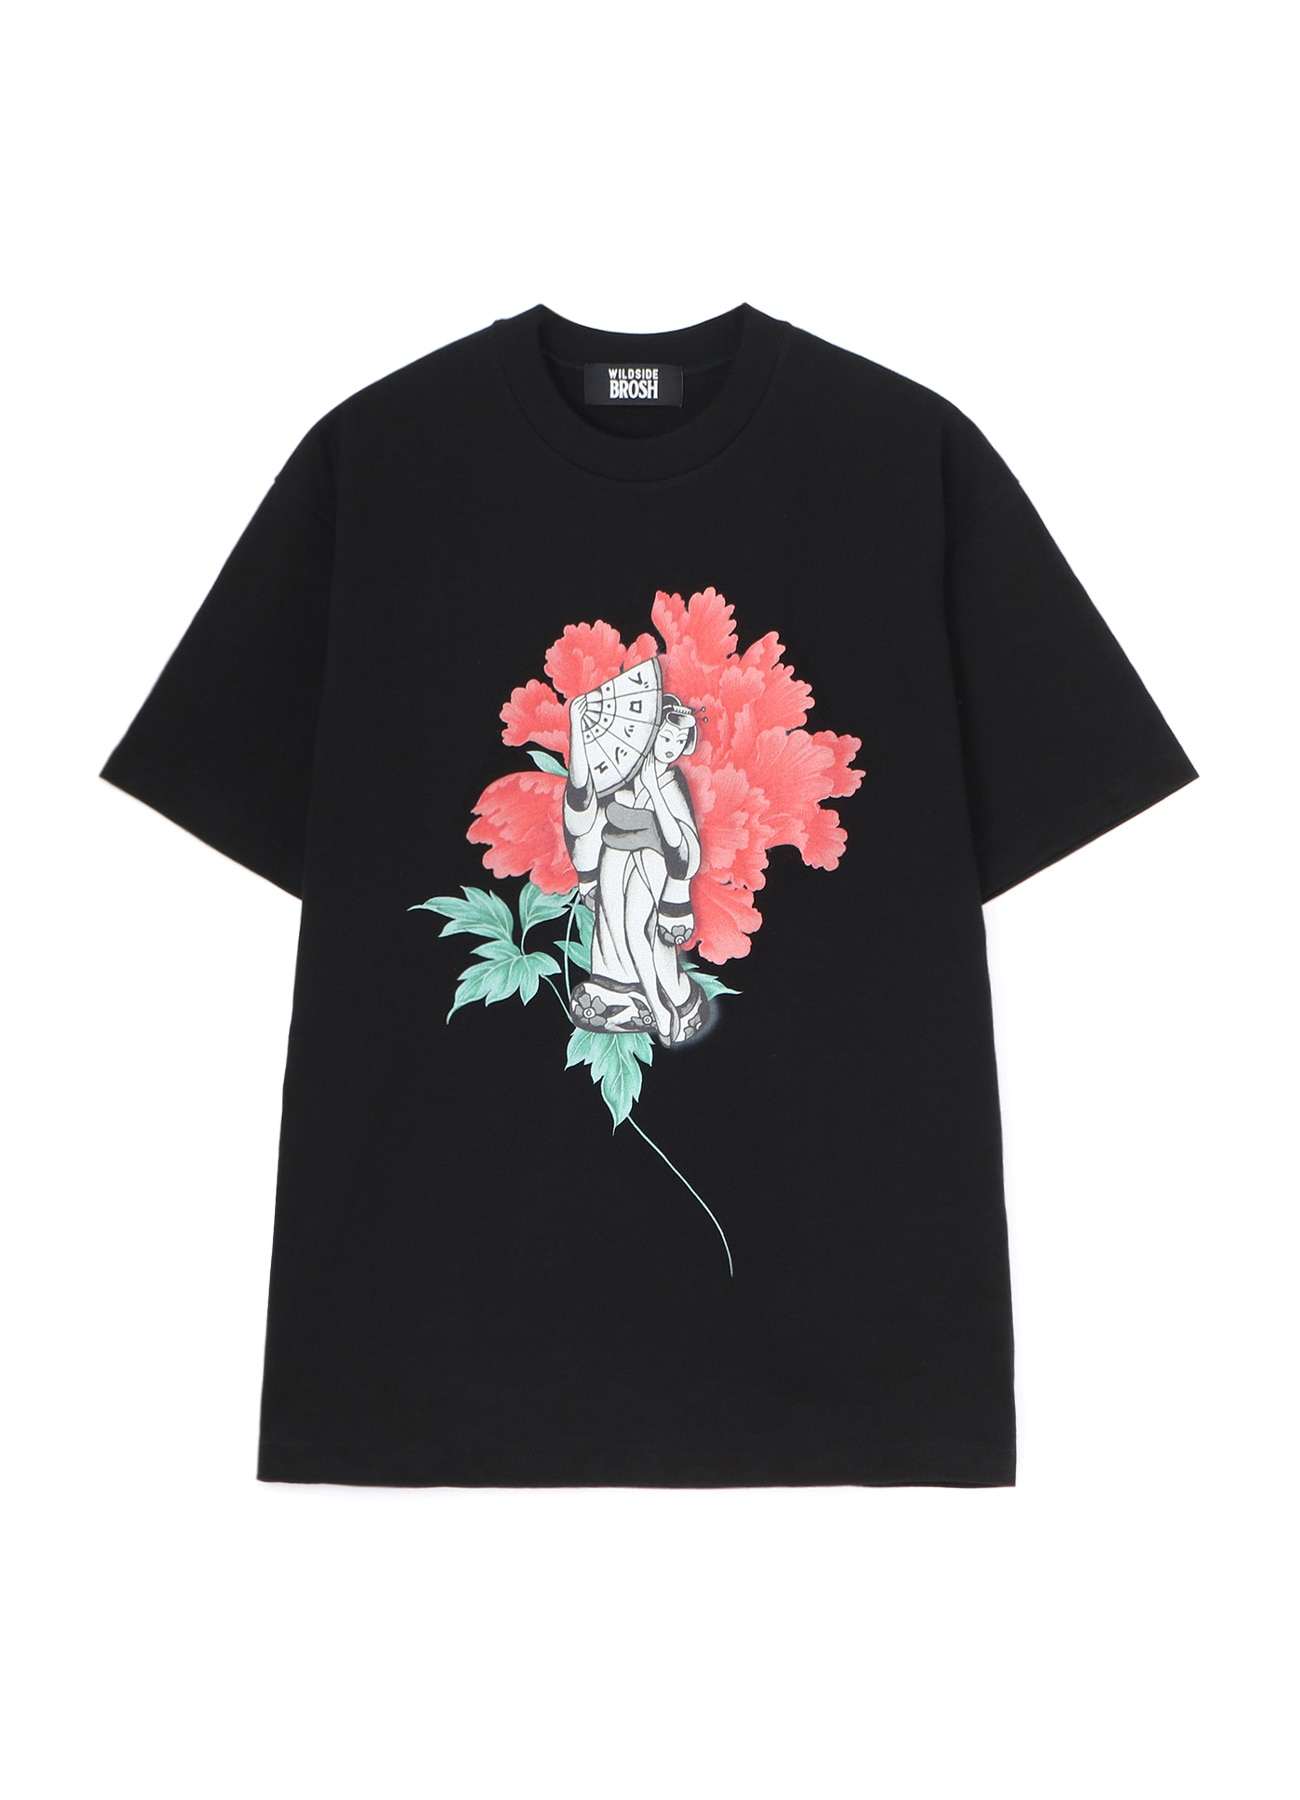 【5/25 12:00(JST) release】WILDSIDE × BROSH T-shirt (Peony)